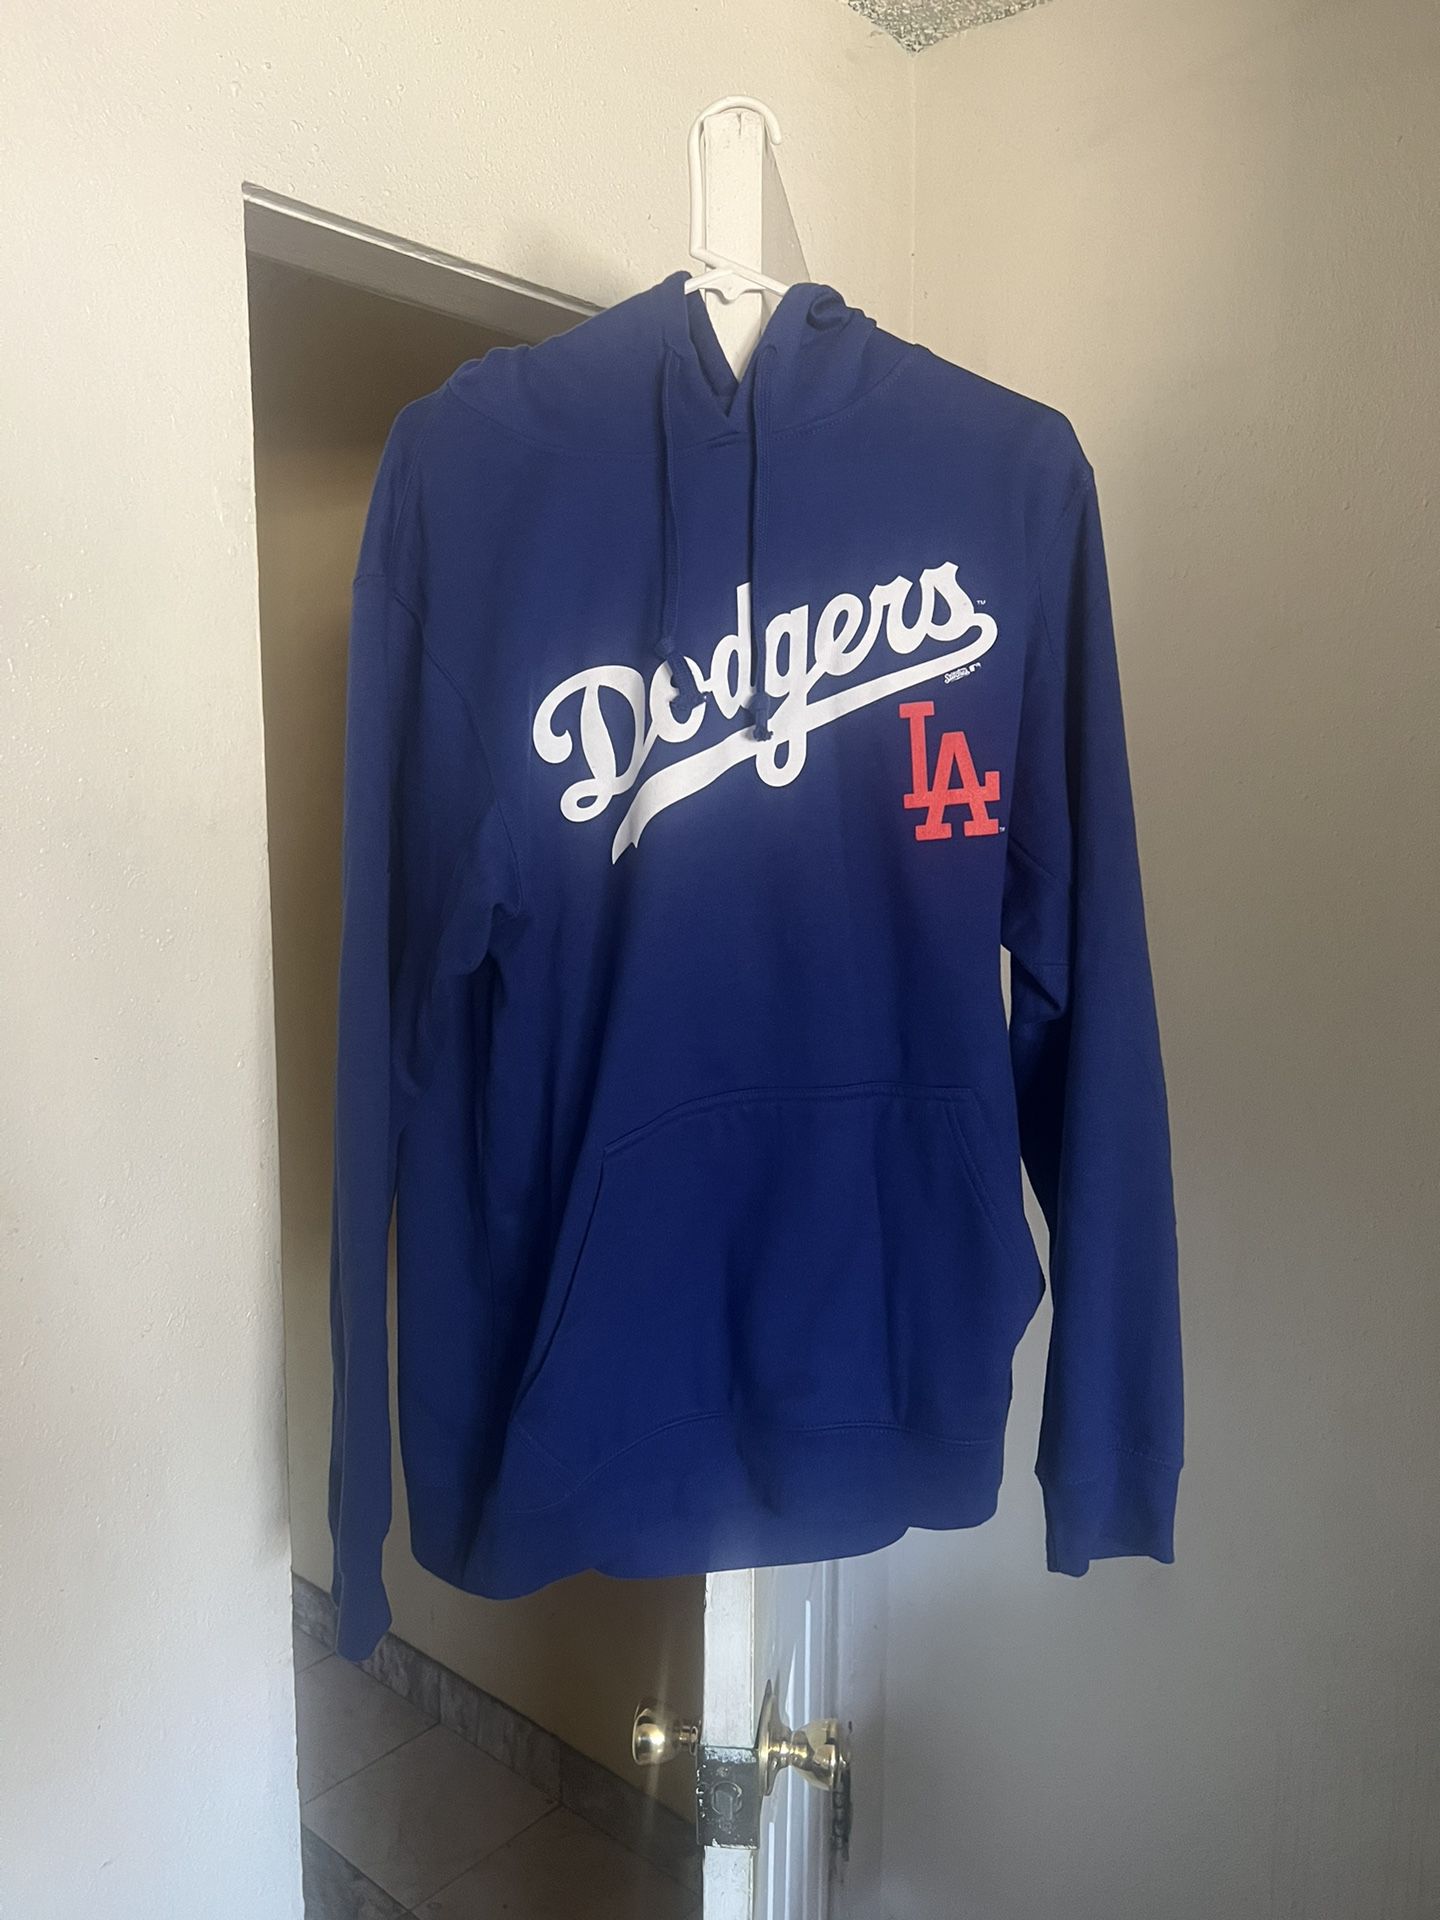 Stitches LA Dodgers Hoodie Blue Sweatshirt Mens Size Large for